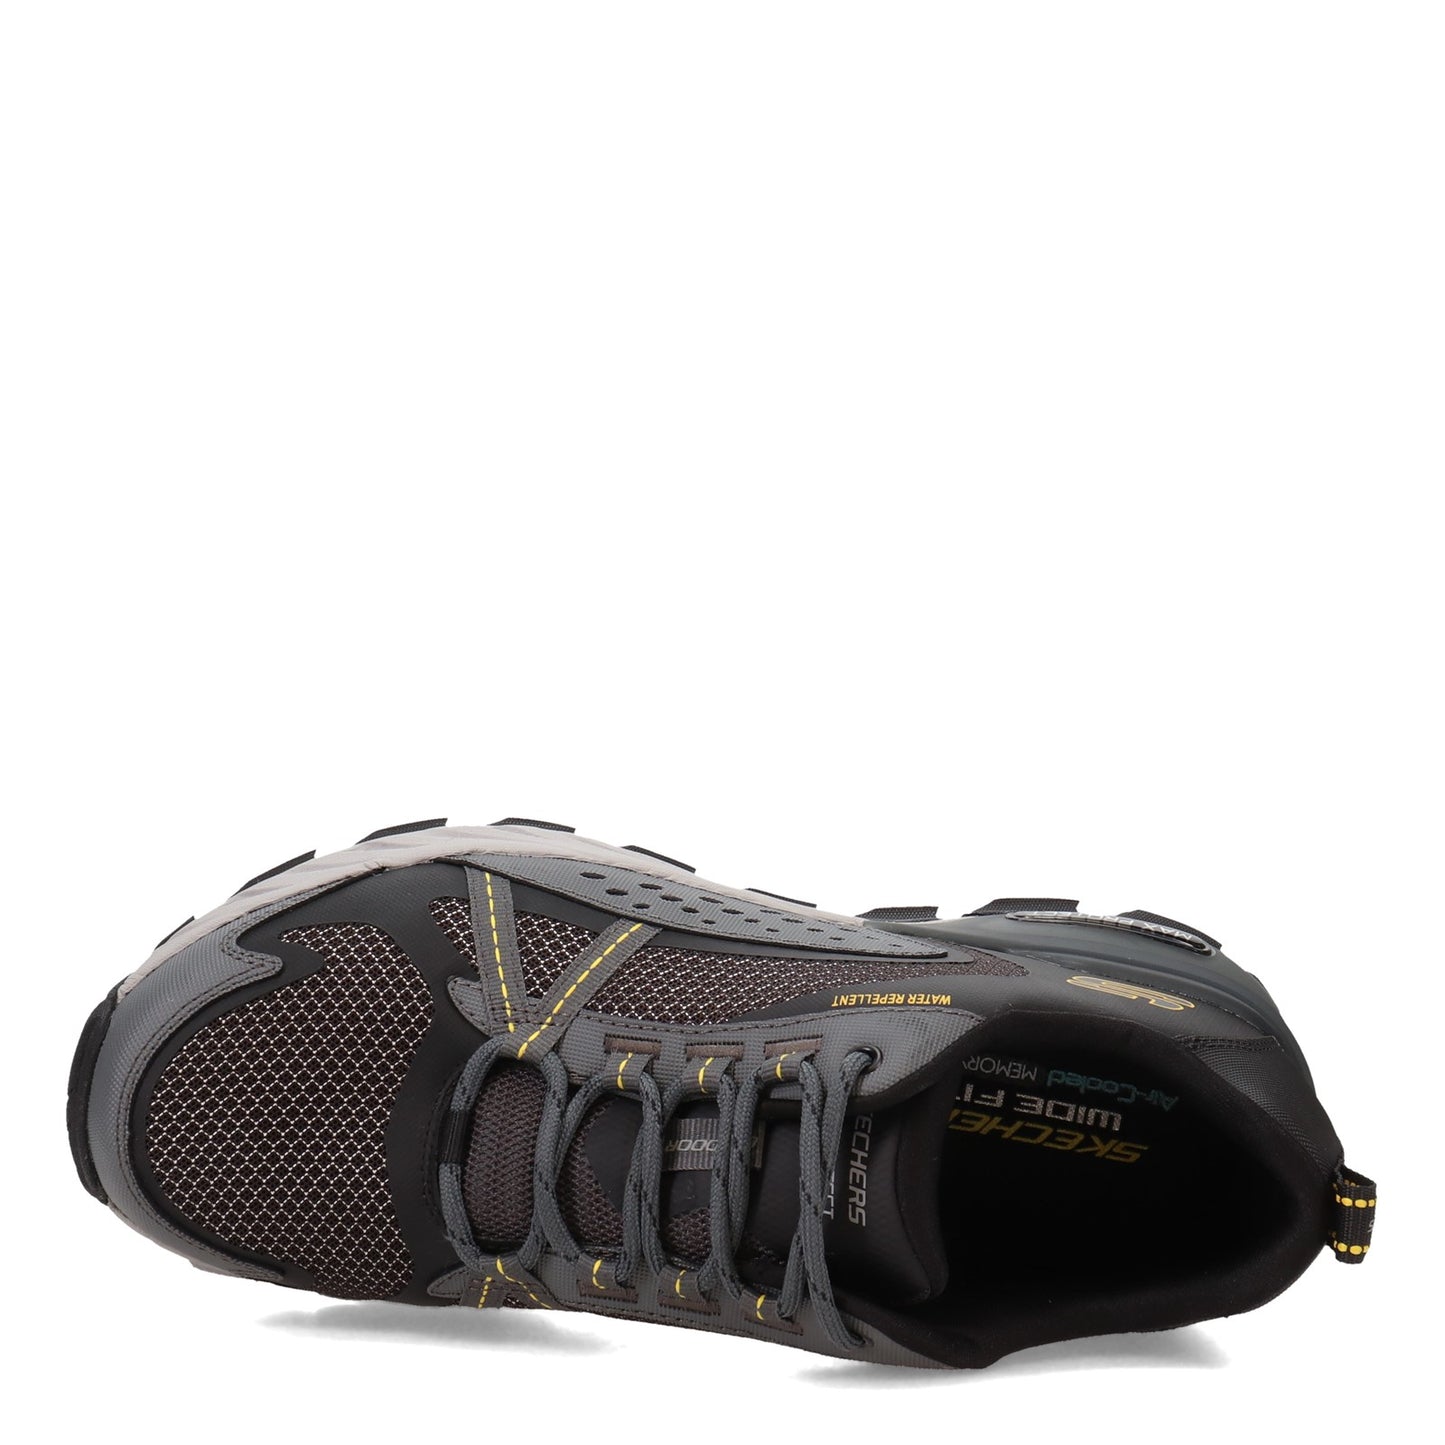 Peltz Shoes  Men's Skechers Max Protect Hiking Shoe - Wide Width Black/Charcoal 237303W-BKCC